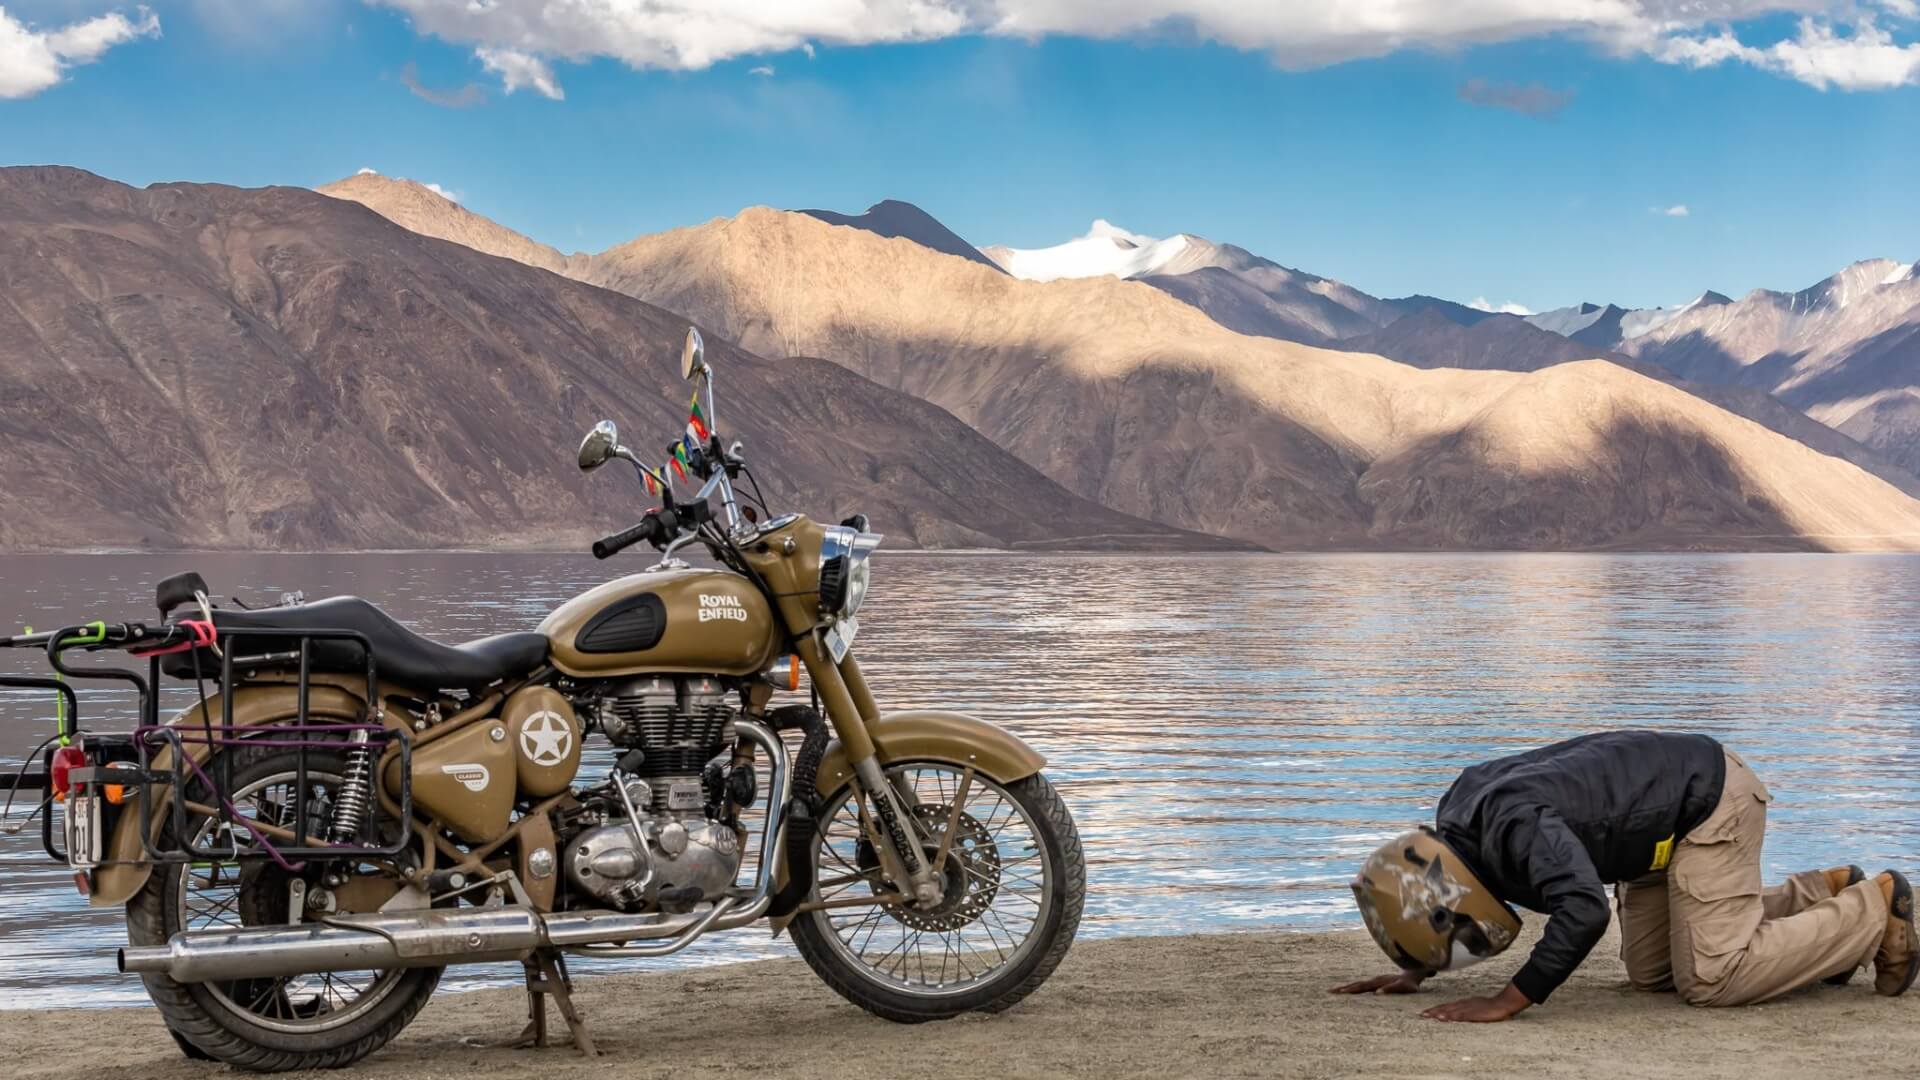 Bike Tour From Manali To Srinagar Via Ladakh. plans2pick. plans to pick